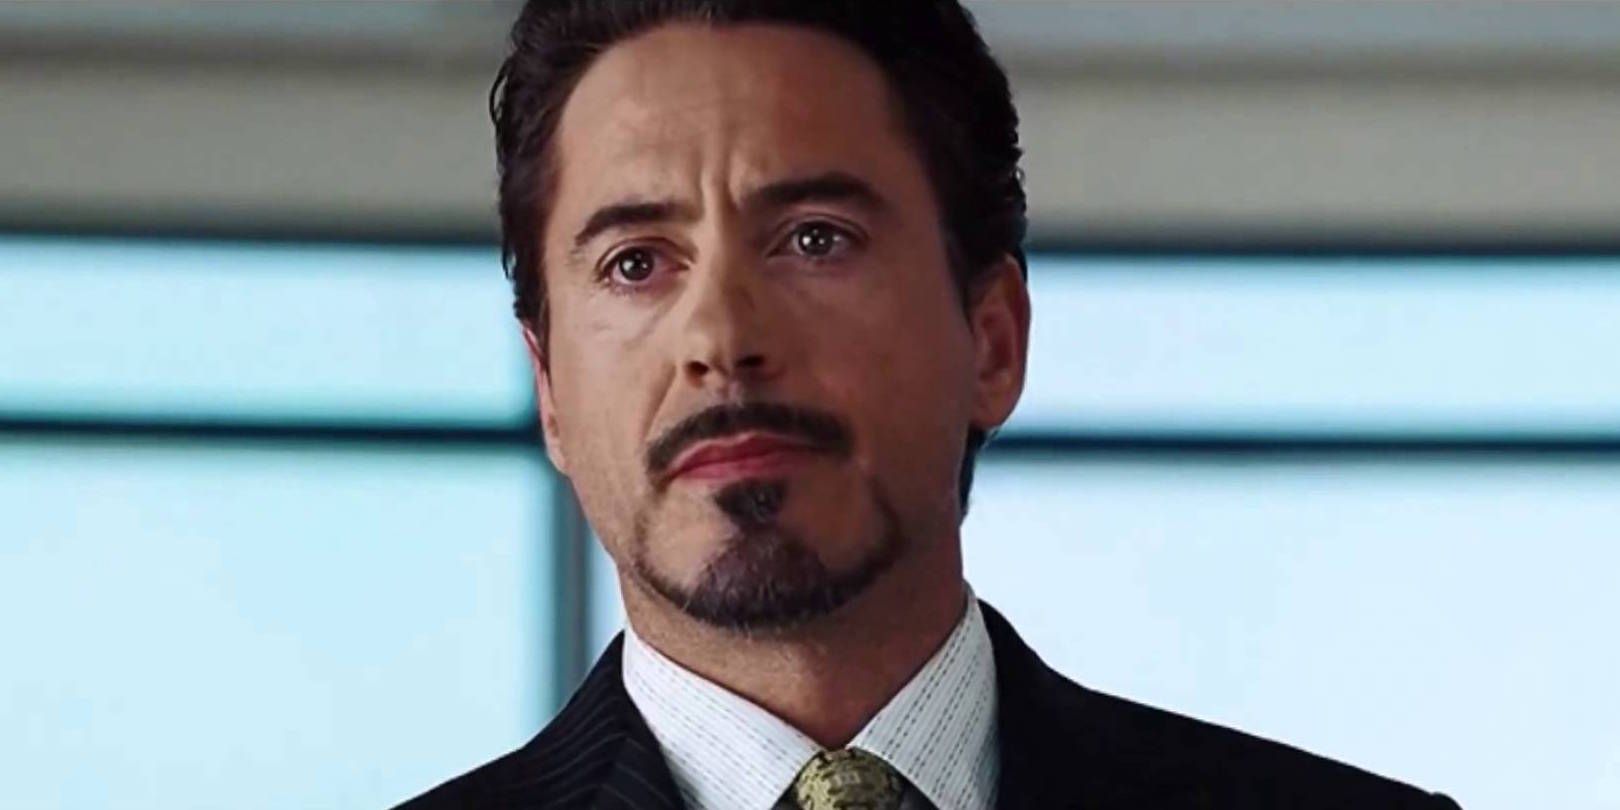 Robert Downey Jr as Tony Stark in Iron Man